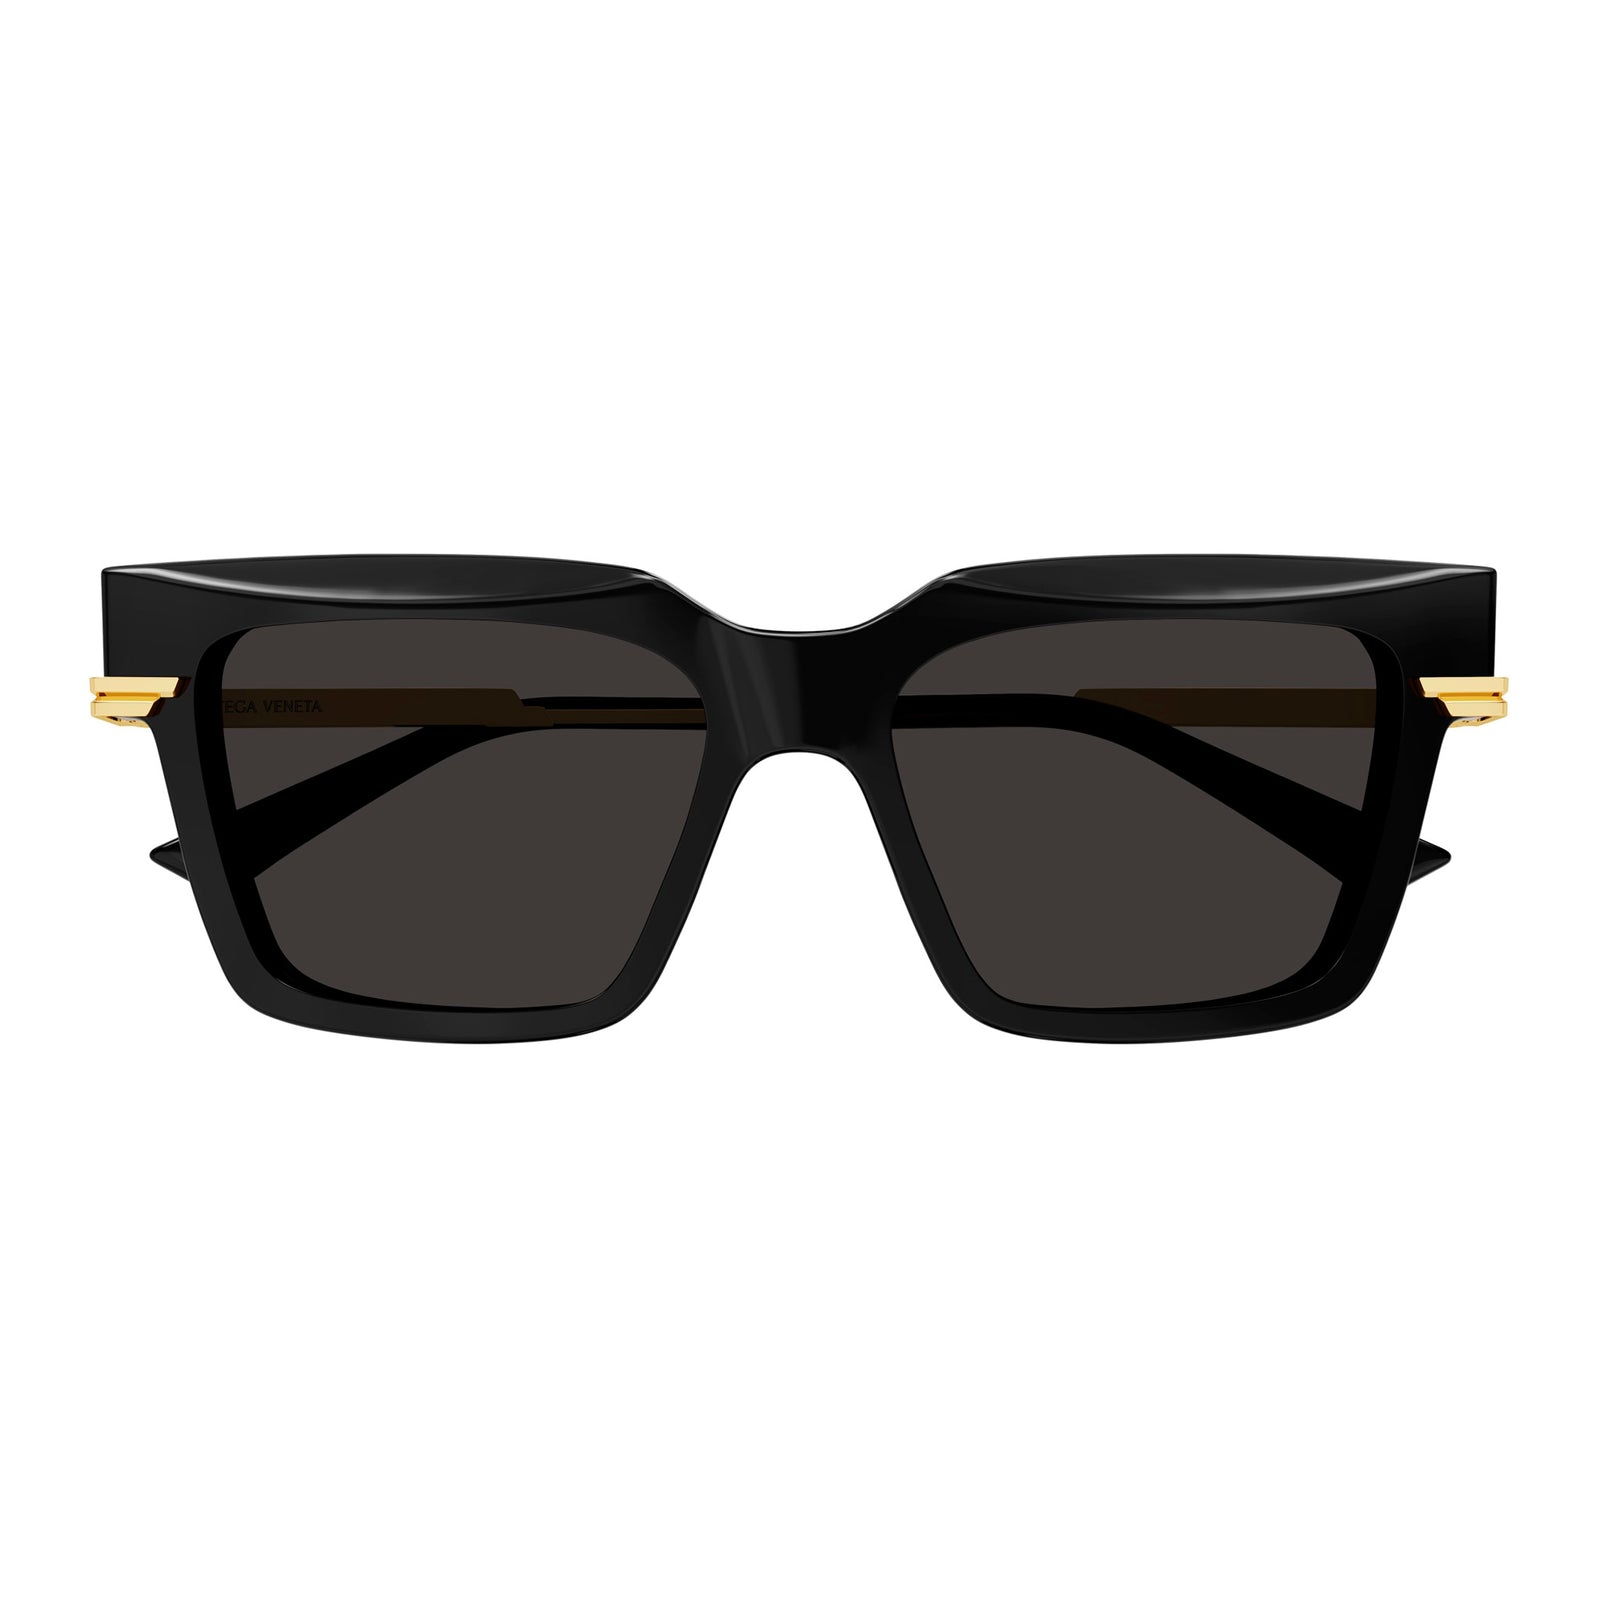 Bottega Veneta® Women's Angle Acetate Pointed Cat Eye Sunglasses in Havana  / Brown. Shop online now.